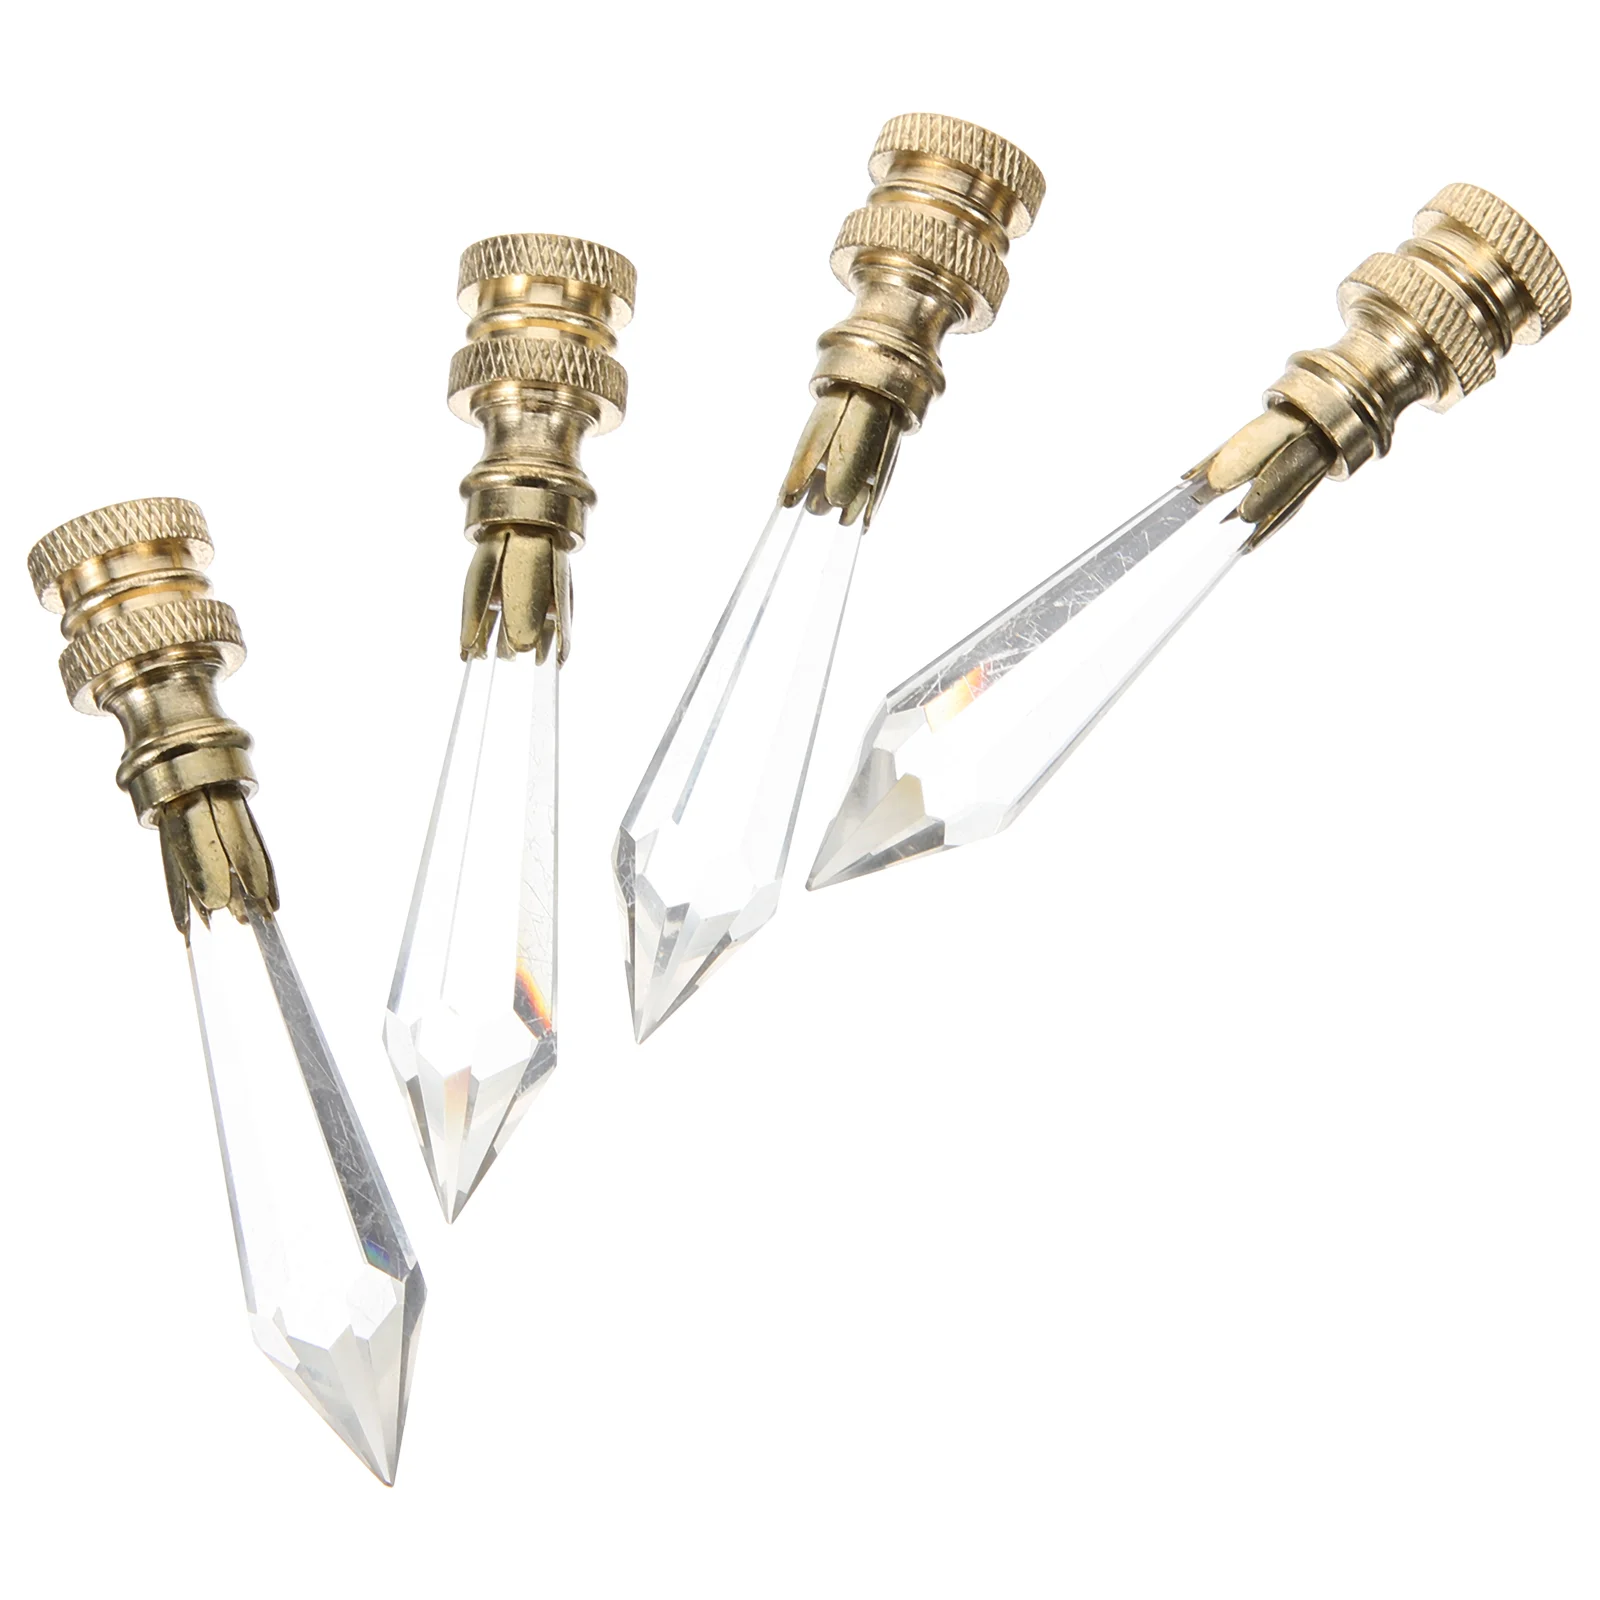 4 Pcs Universal Lampshade Decorative Head Lights for Decoration Brass Glass Finials